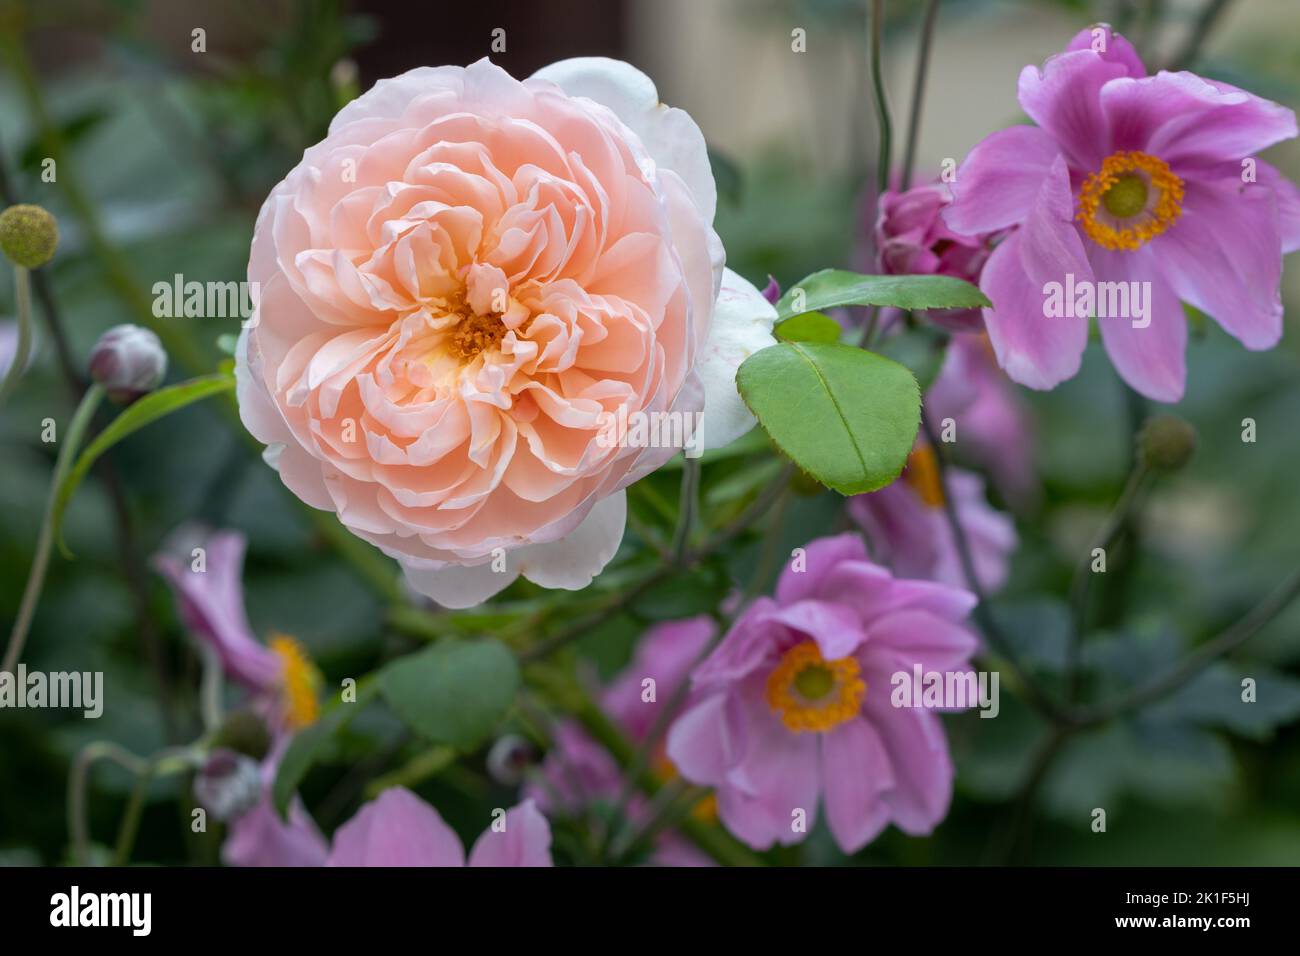 english rose Wildeve and japanese anemones in garden macro Stock Photo